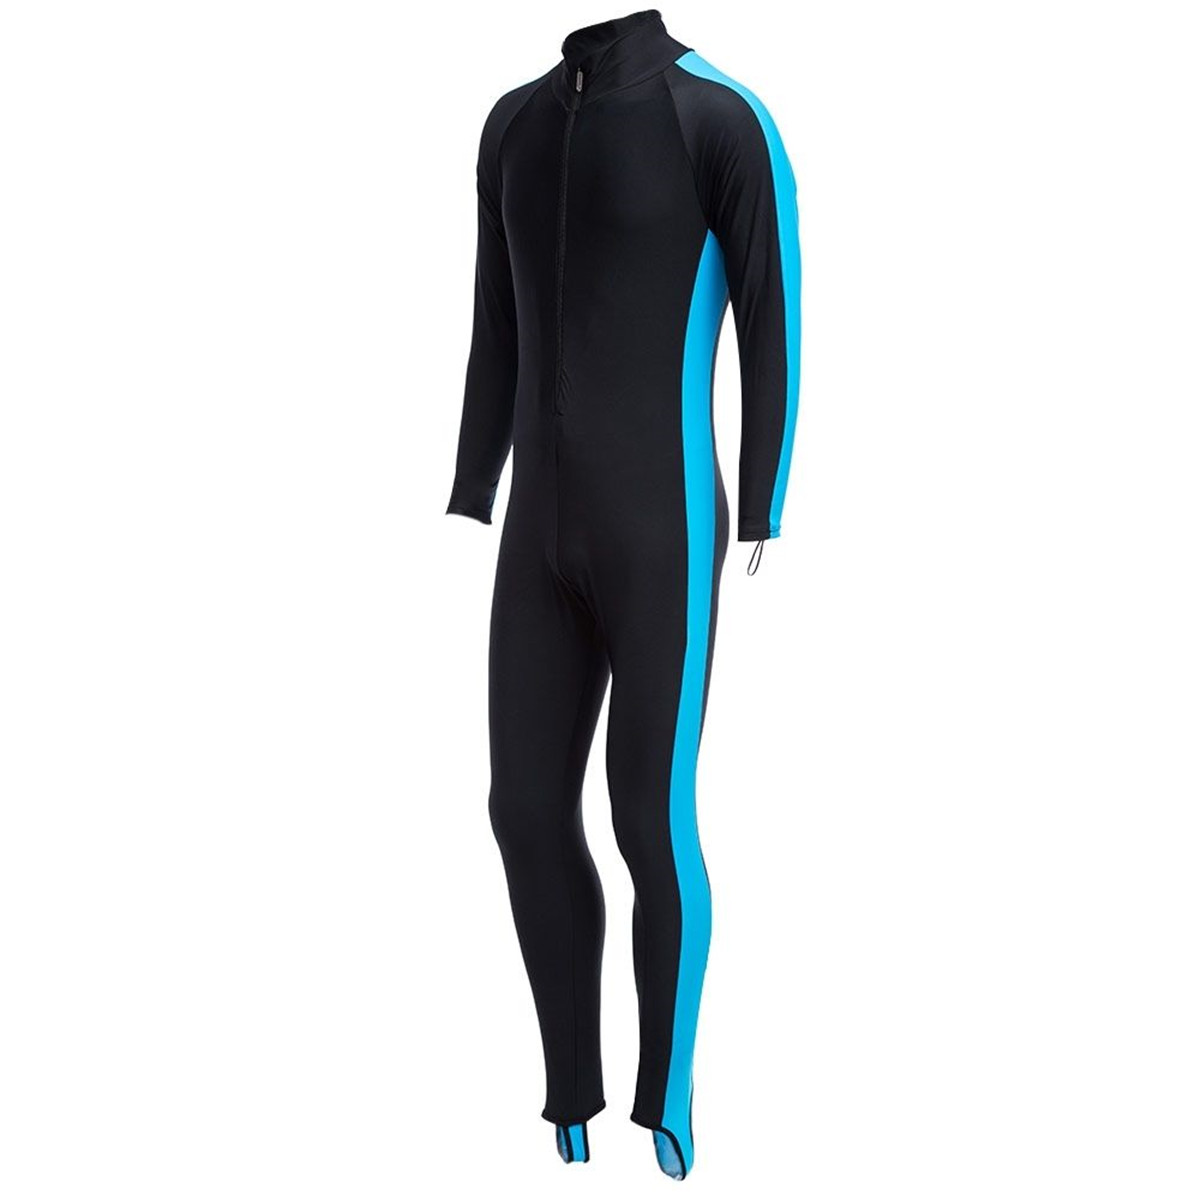 Unisex-Full-Body-Diving-Suit-Men-Women-Scuba-Diving-Wetsuit-Swimming-Surfing-UV-Protection-Snorkelin-1714664-8